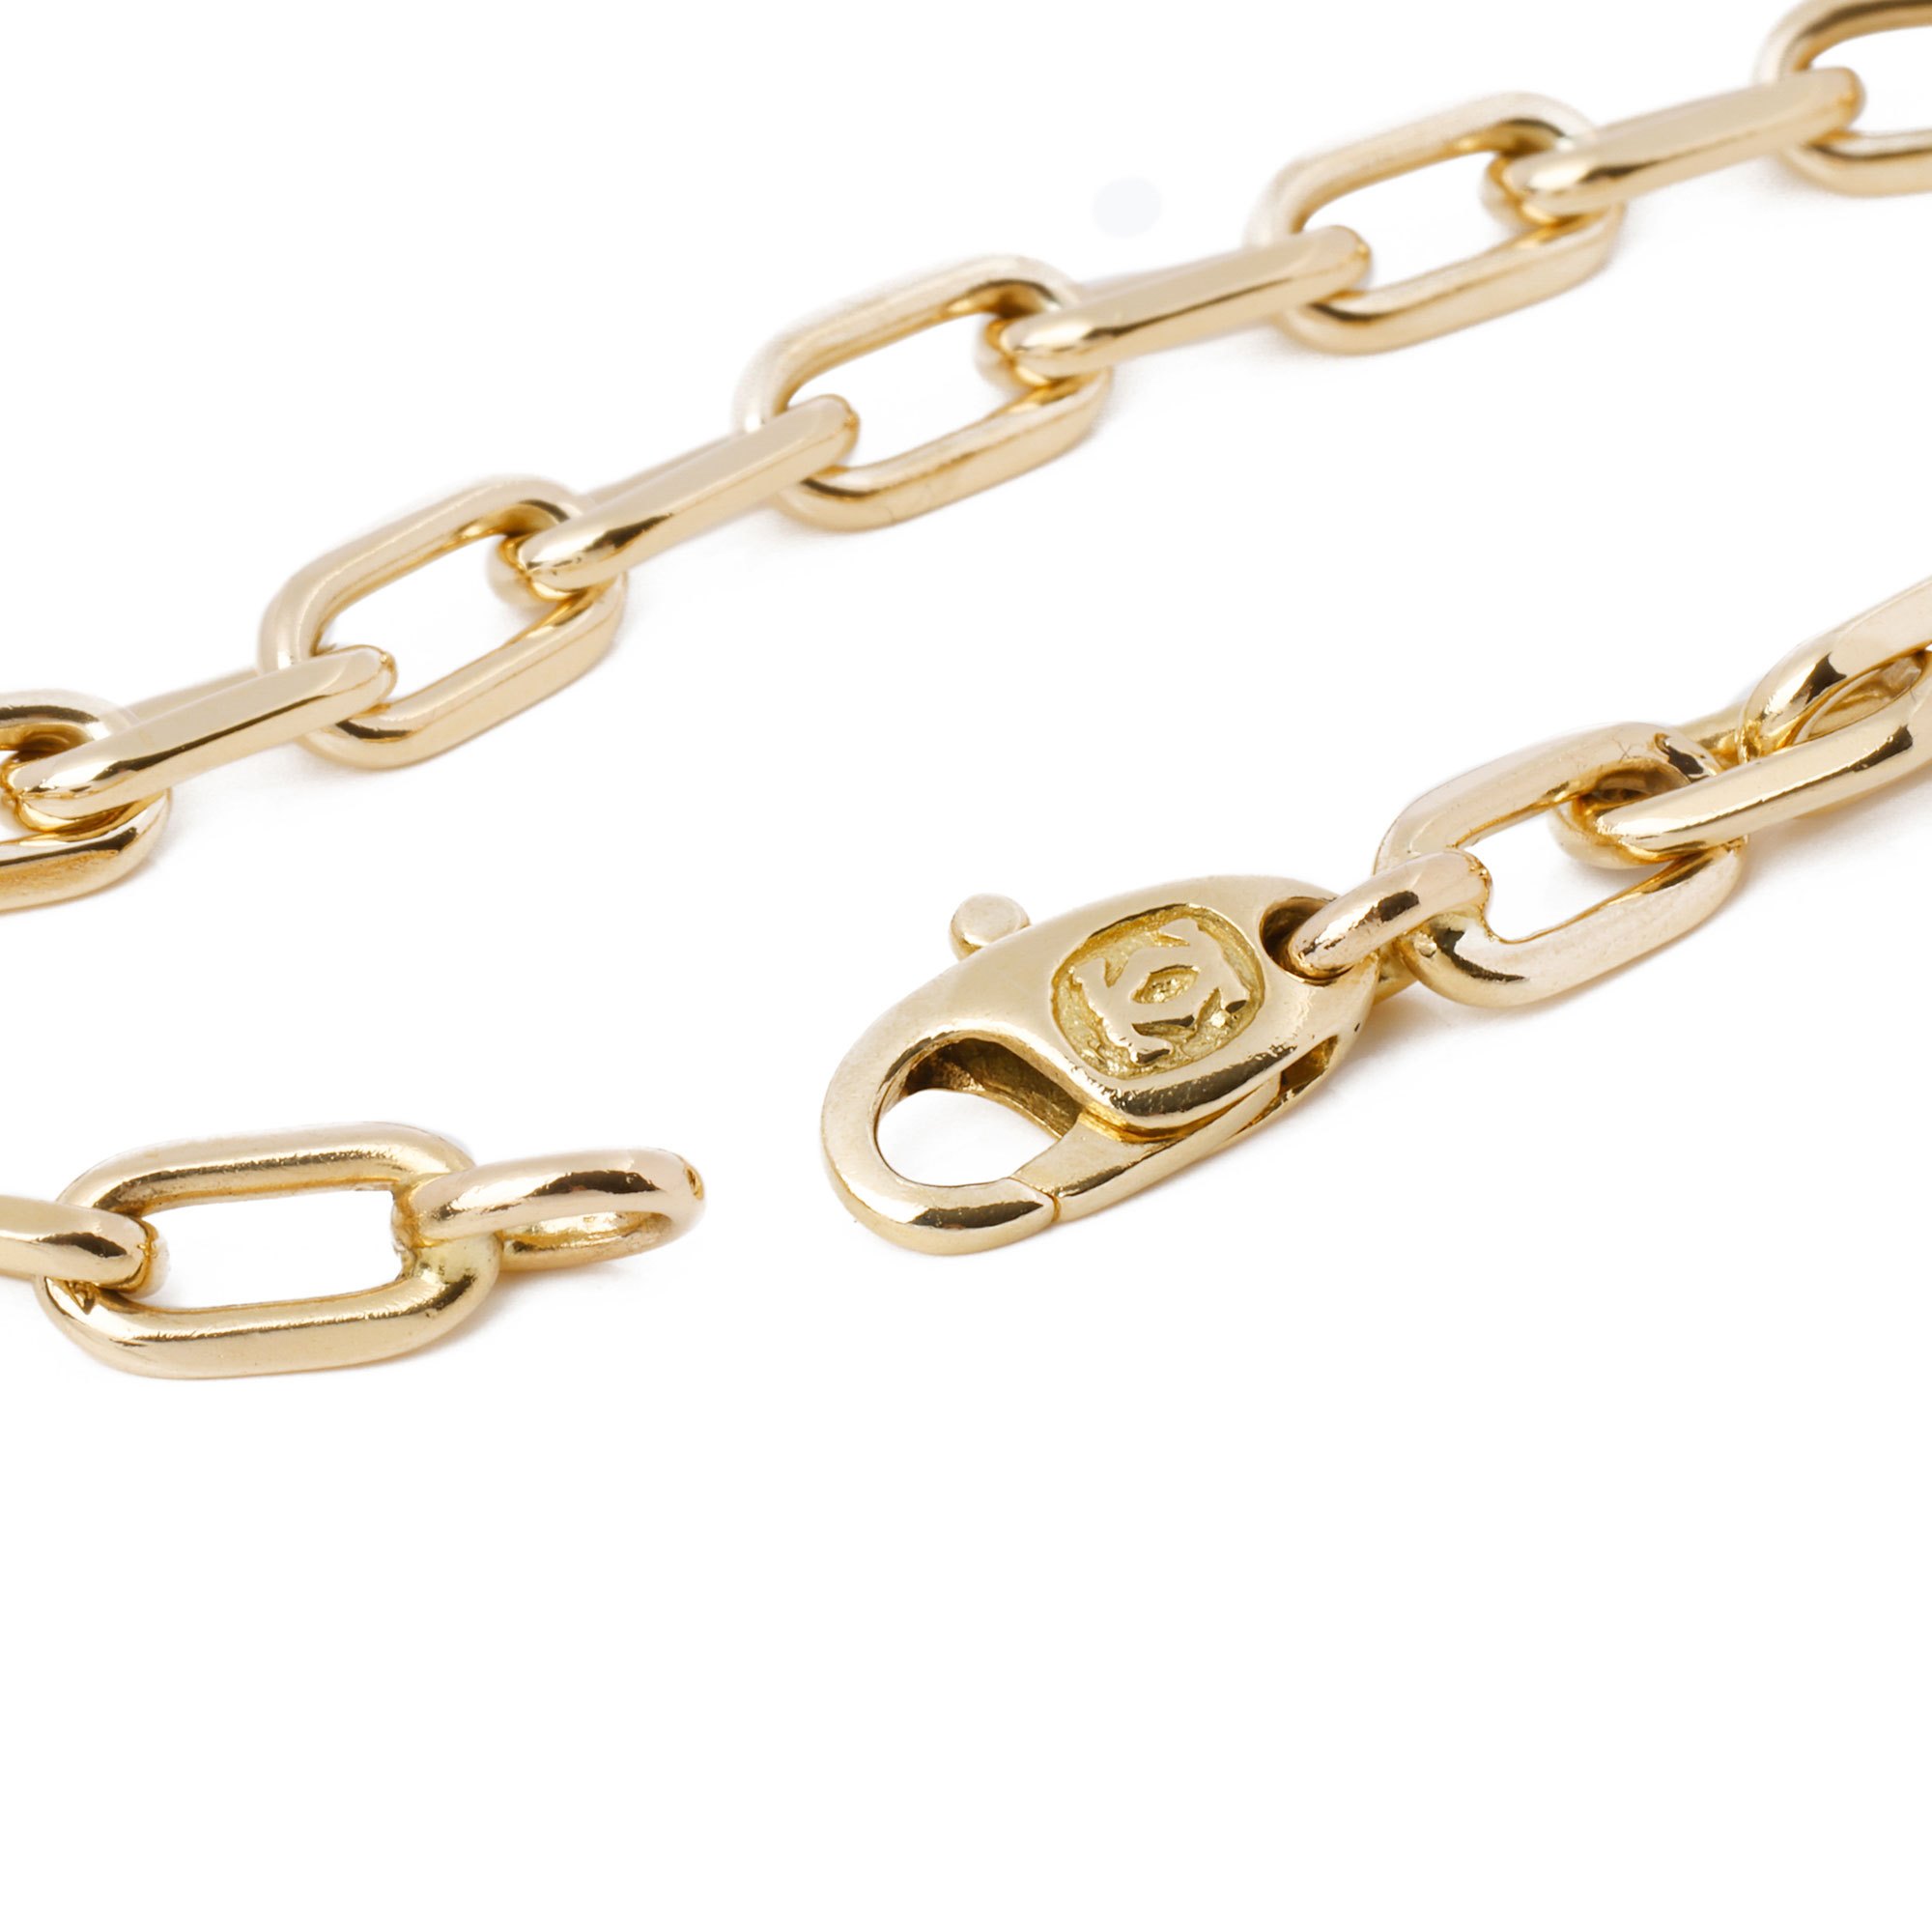 Cartier Santos 18ct gold bracelet